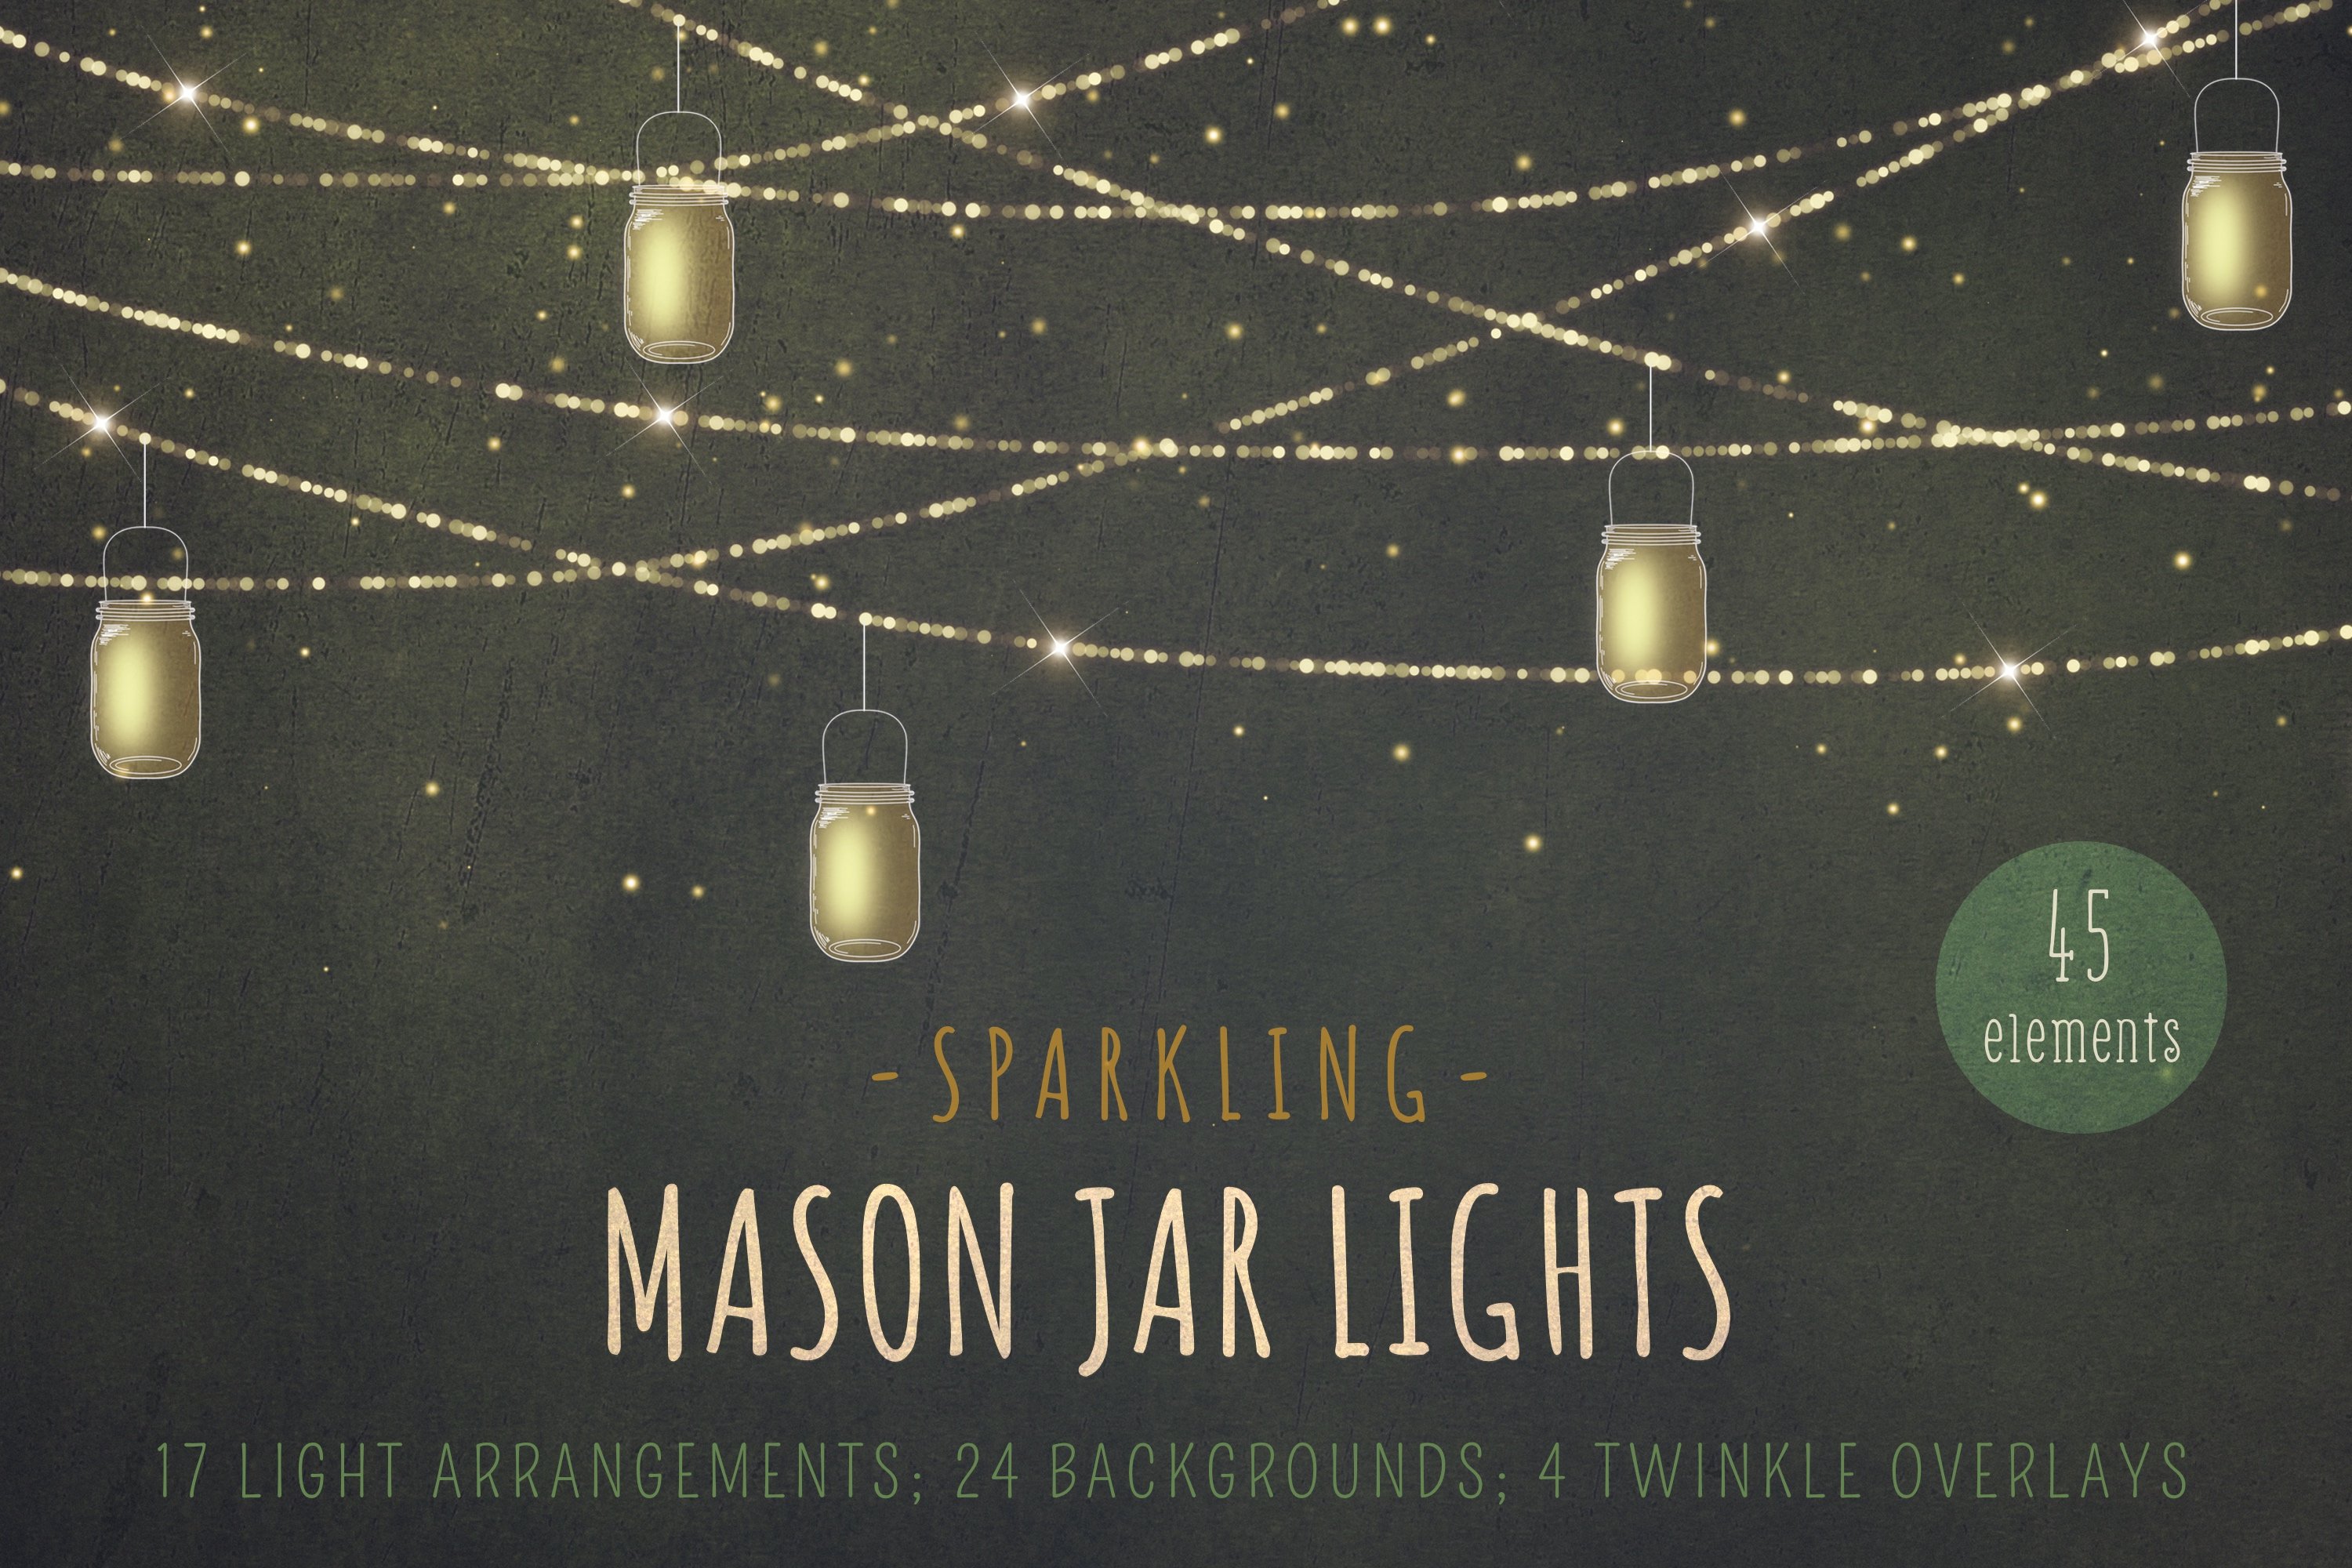 Mason jar lights clipart cover image.